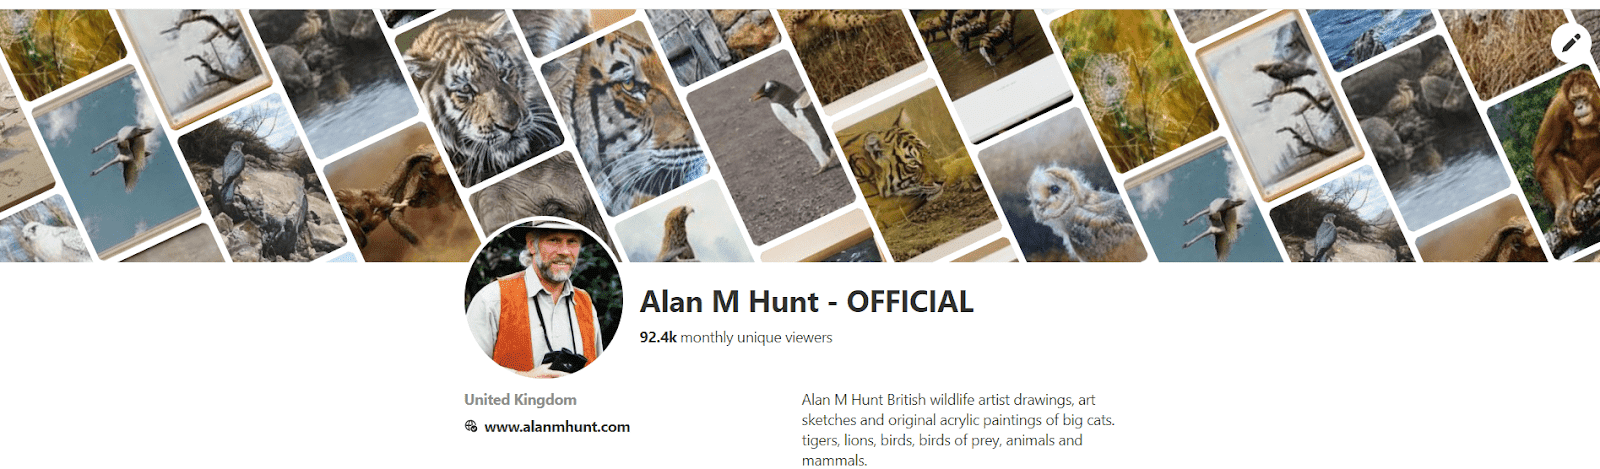 British Animal Artist Alan M Hunt